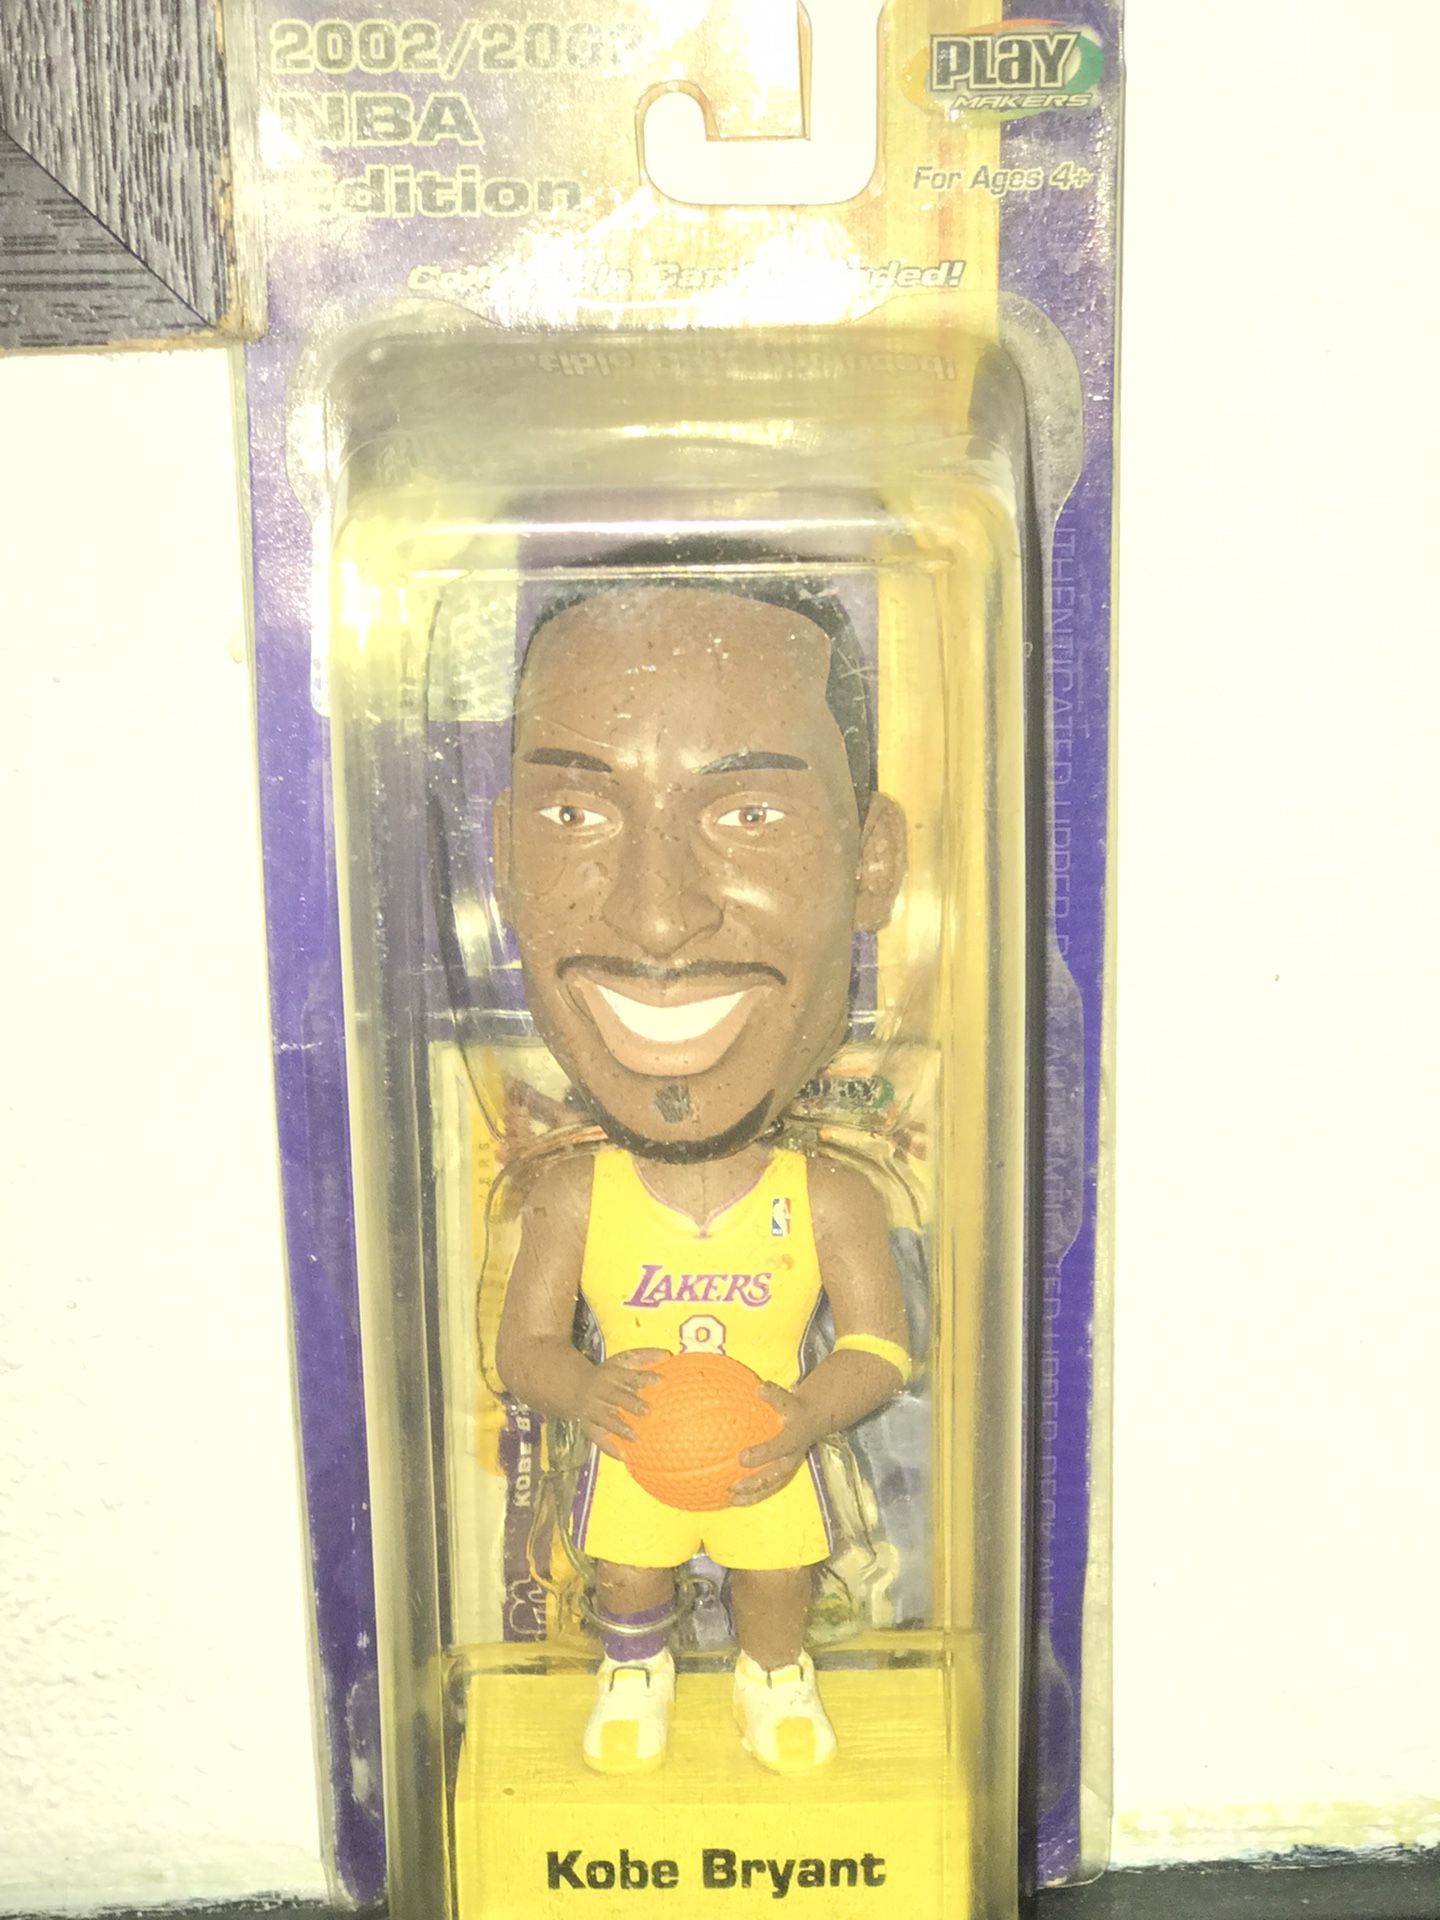 2002/2003 NBA Edition Kobe Bryant Bobblehead 